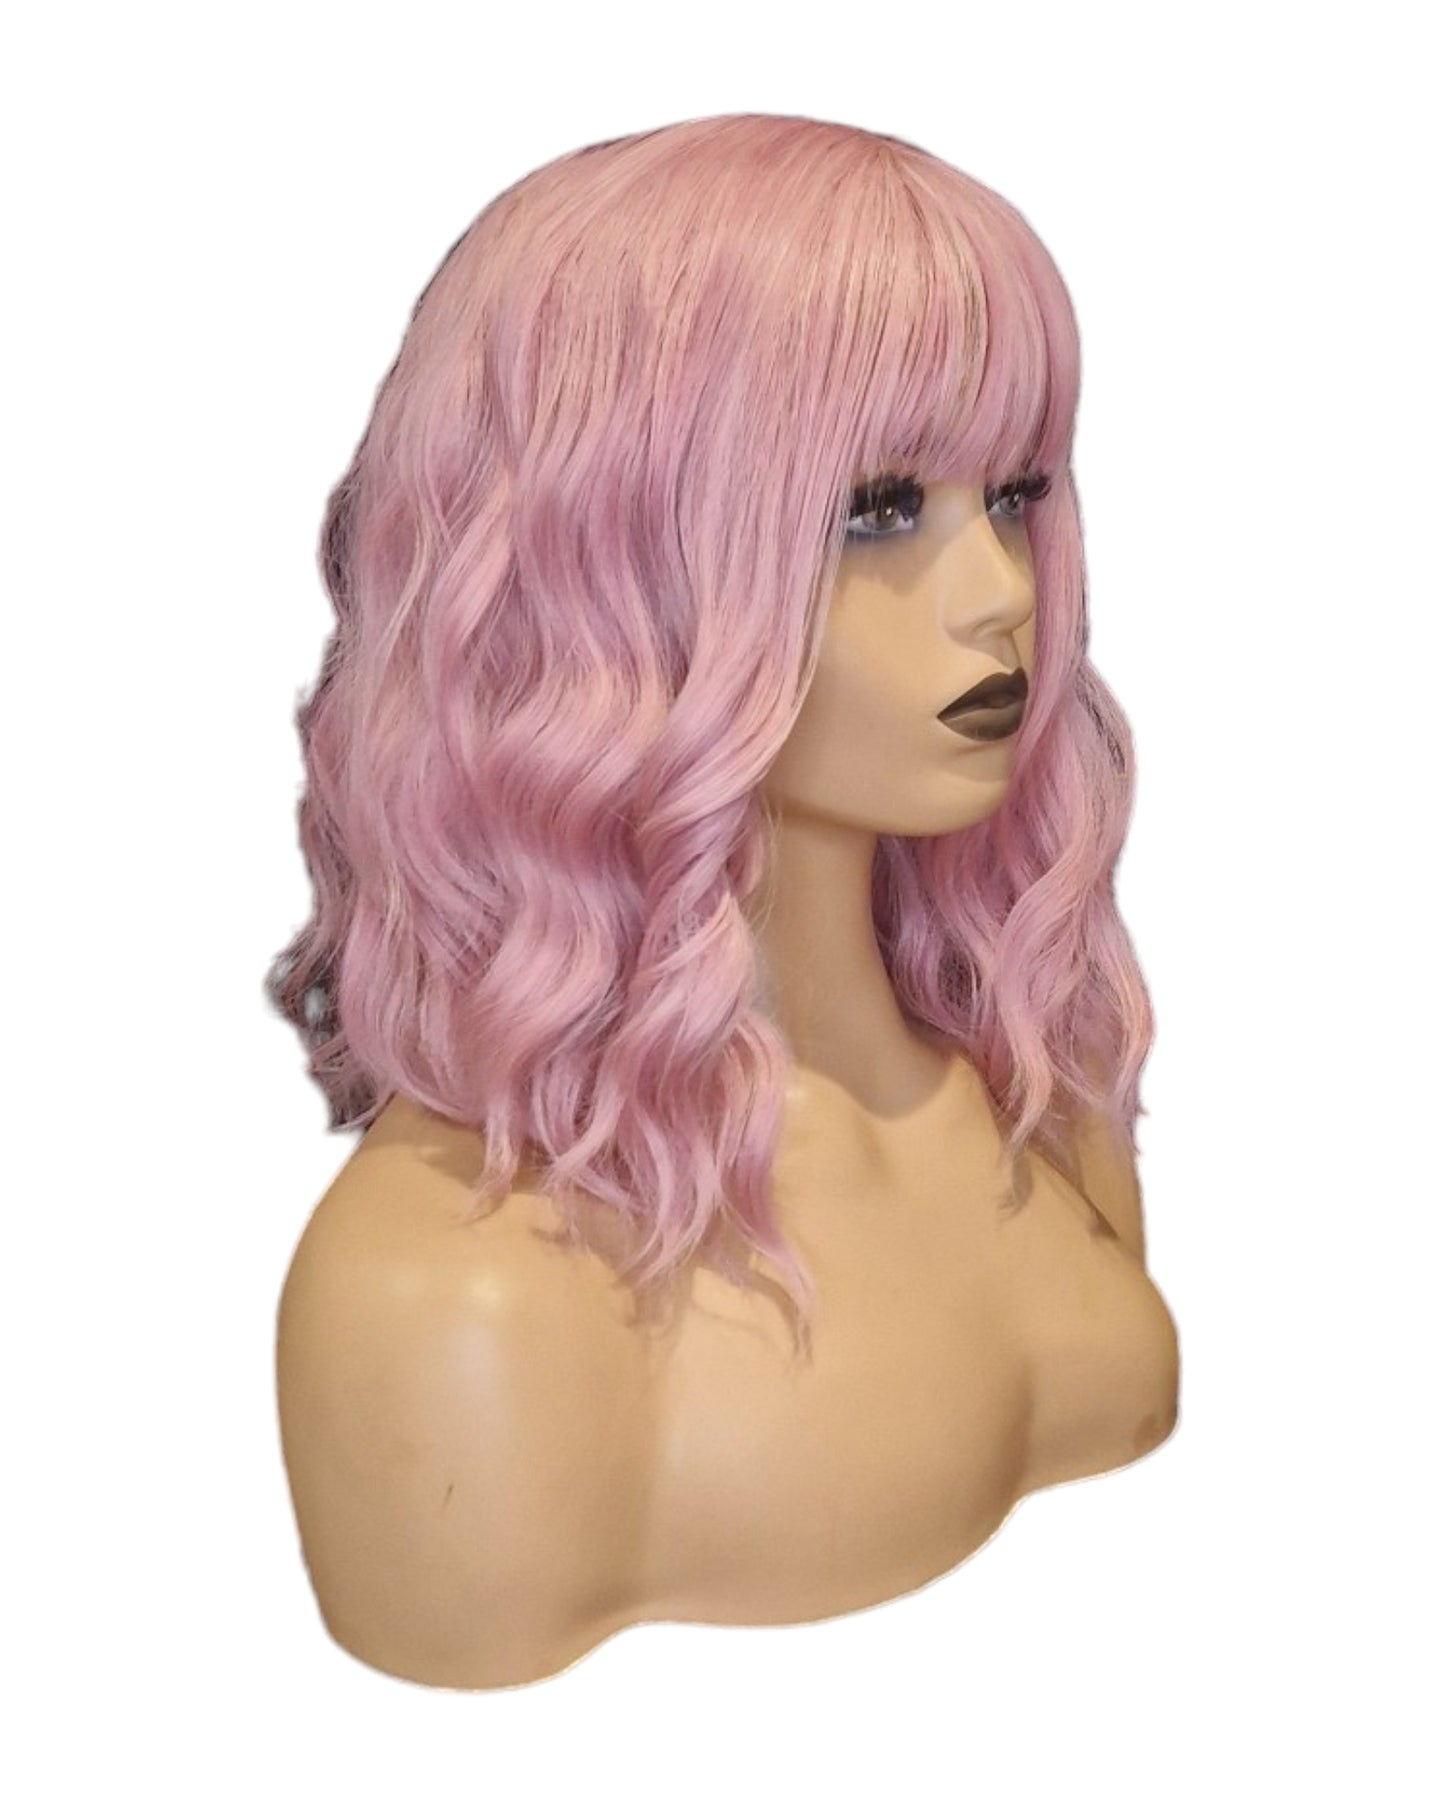 Wavy Pink Fashion Wig With Fringe Bangs. Sherry